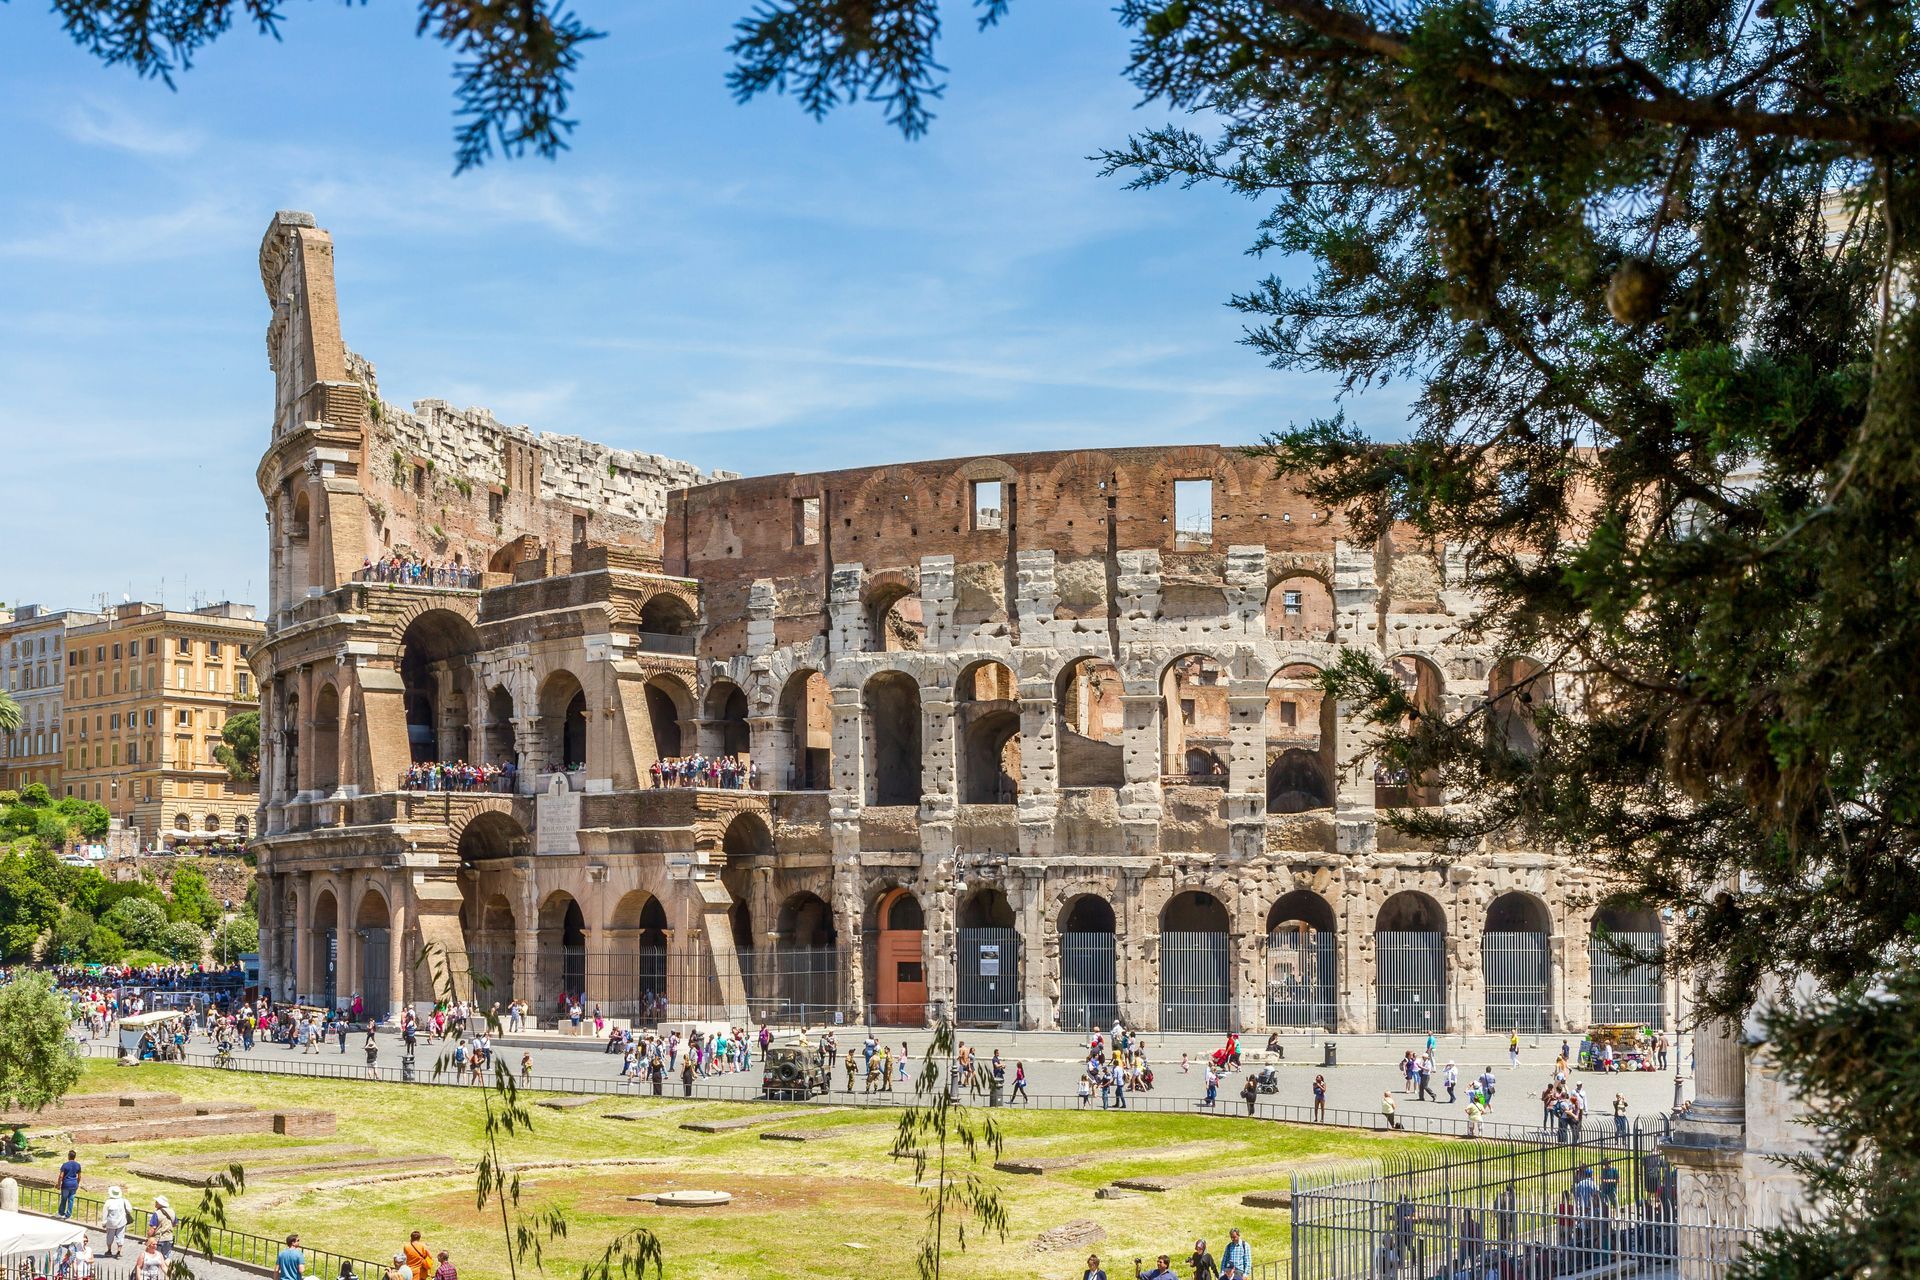 Book a guided Colosseum tour